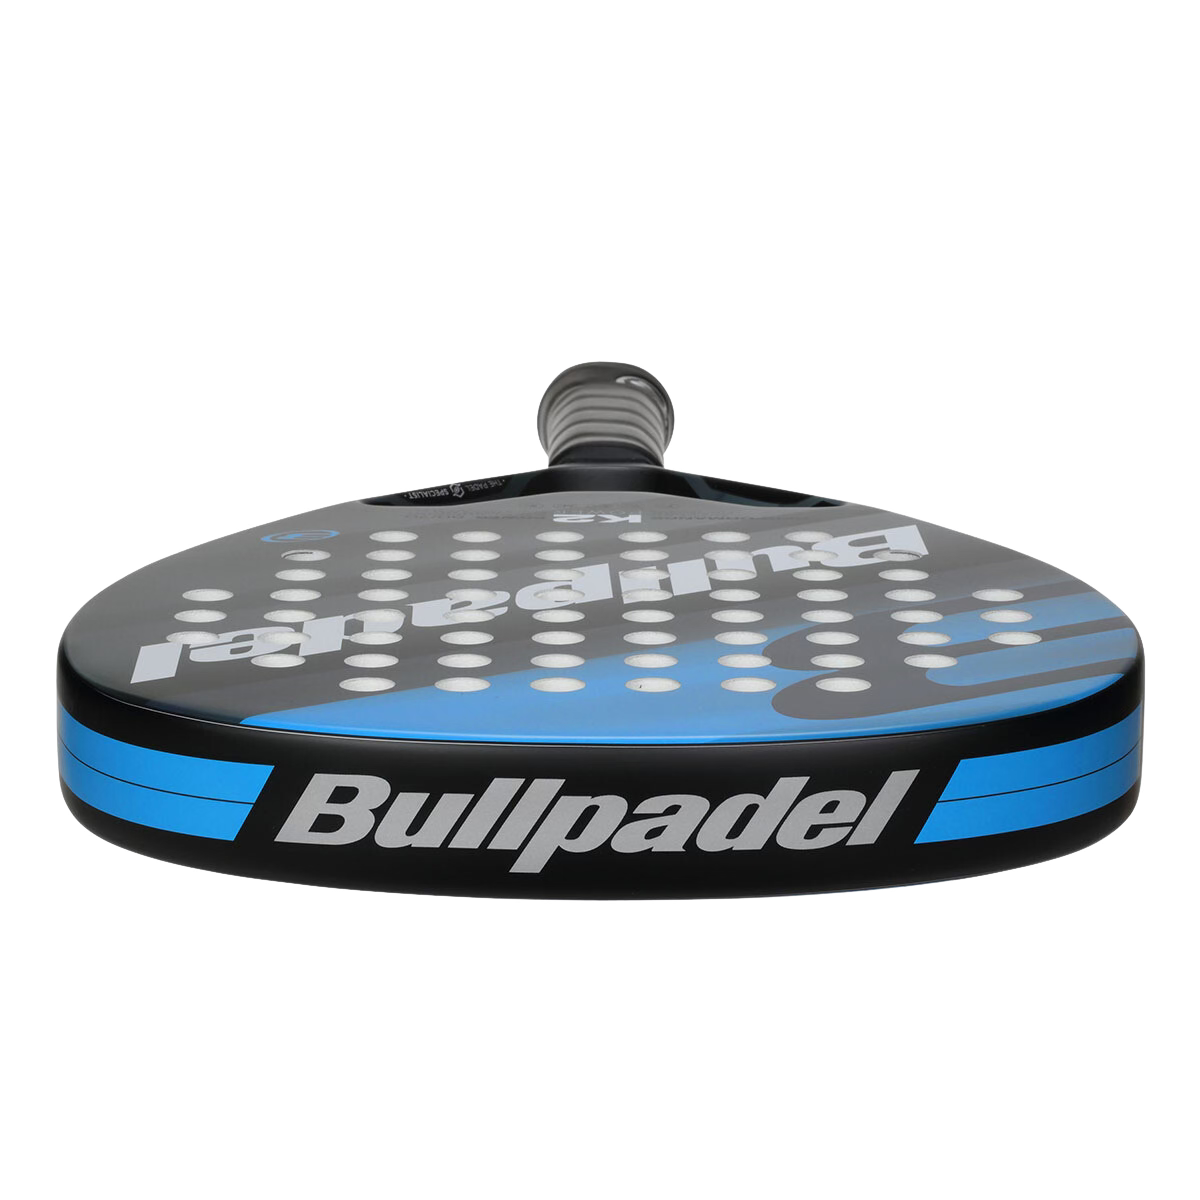 Bullpadel Padel Racket K2 Power